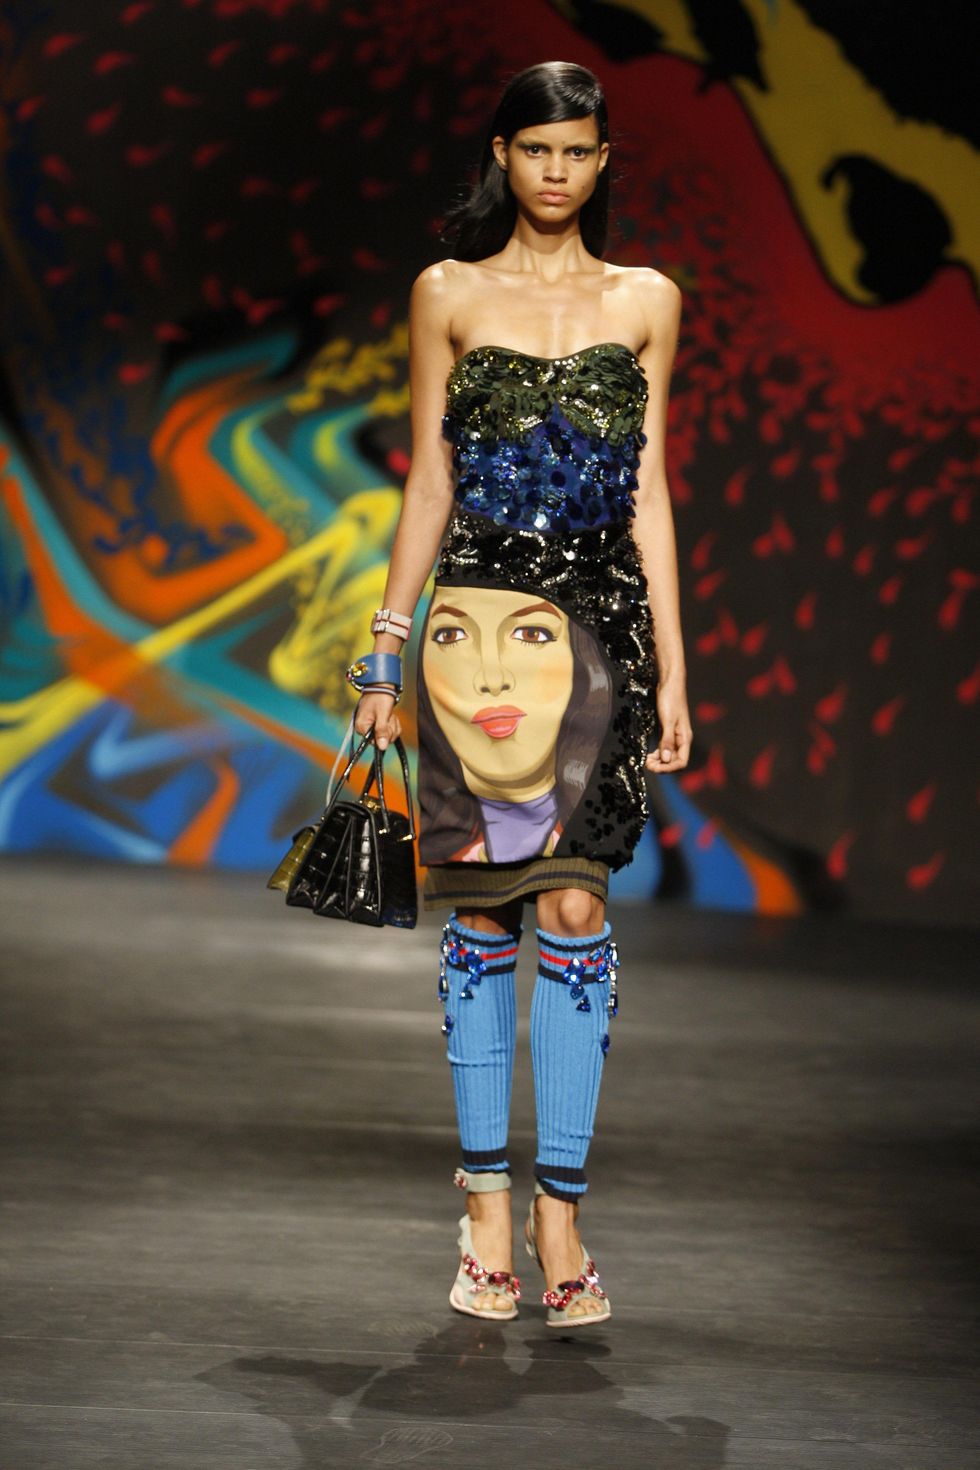 Pop art images of a woman's face were featured. - CultureMap Dallas